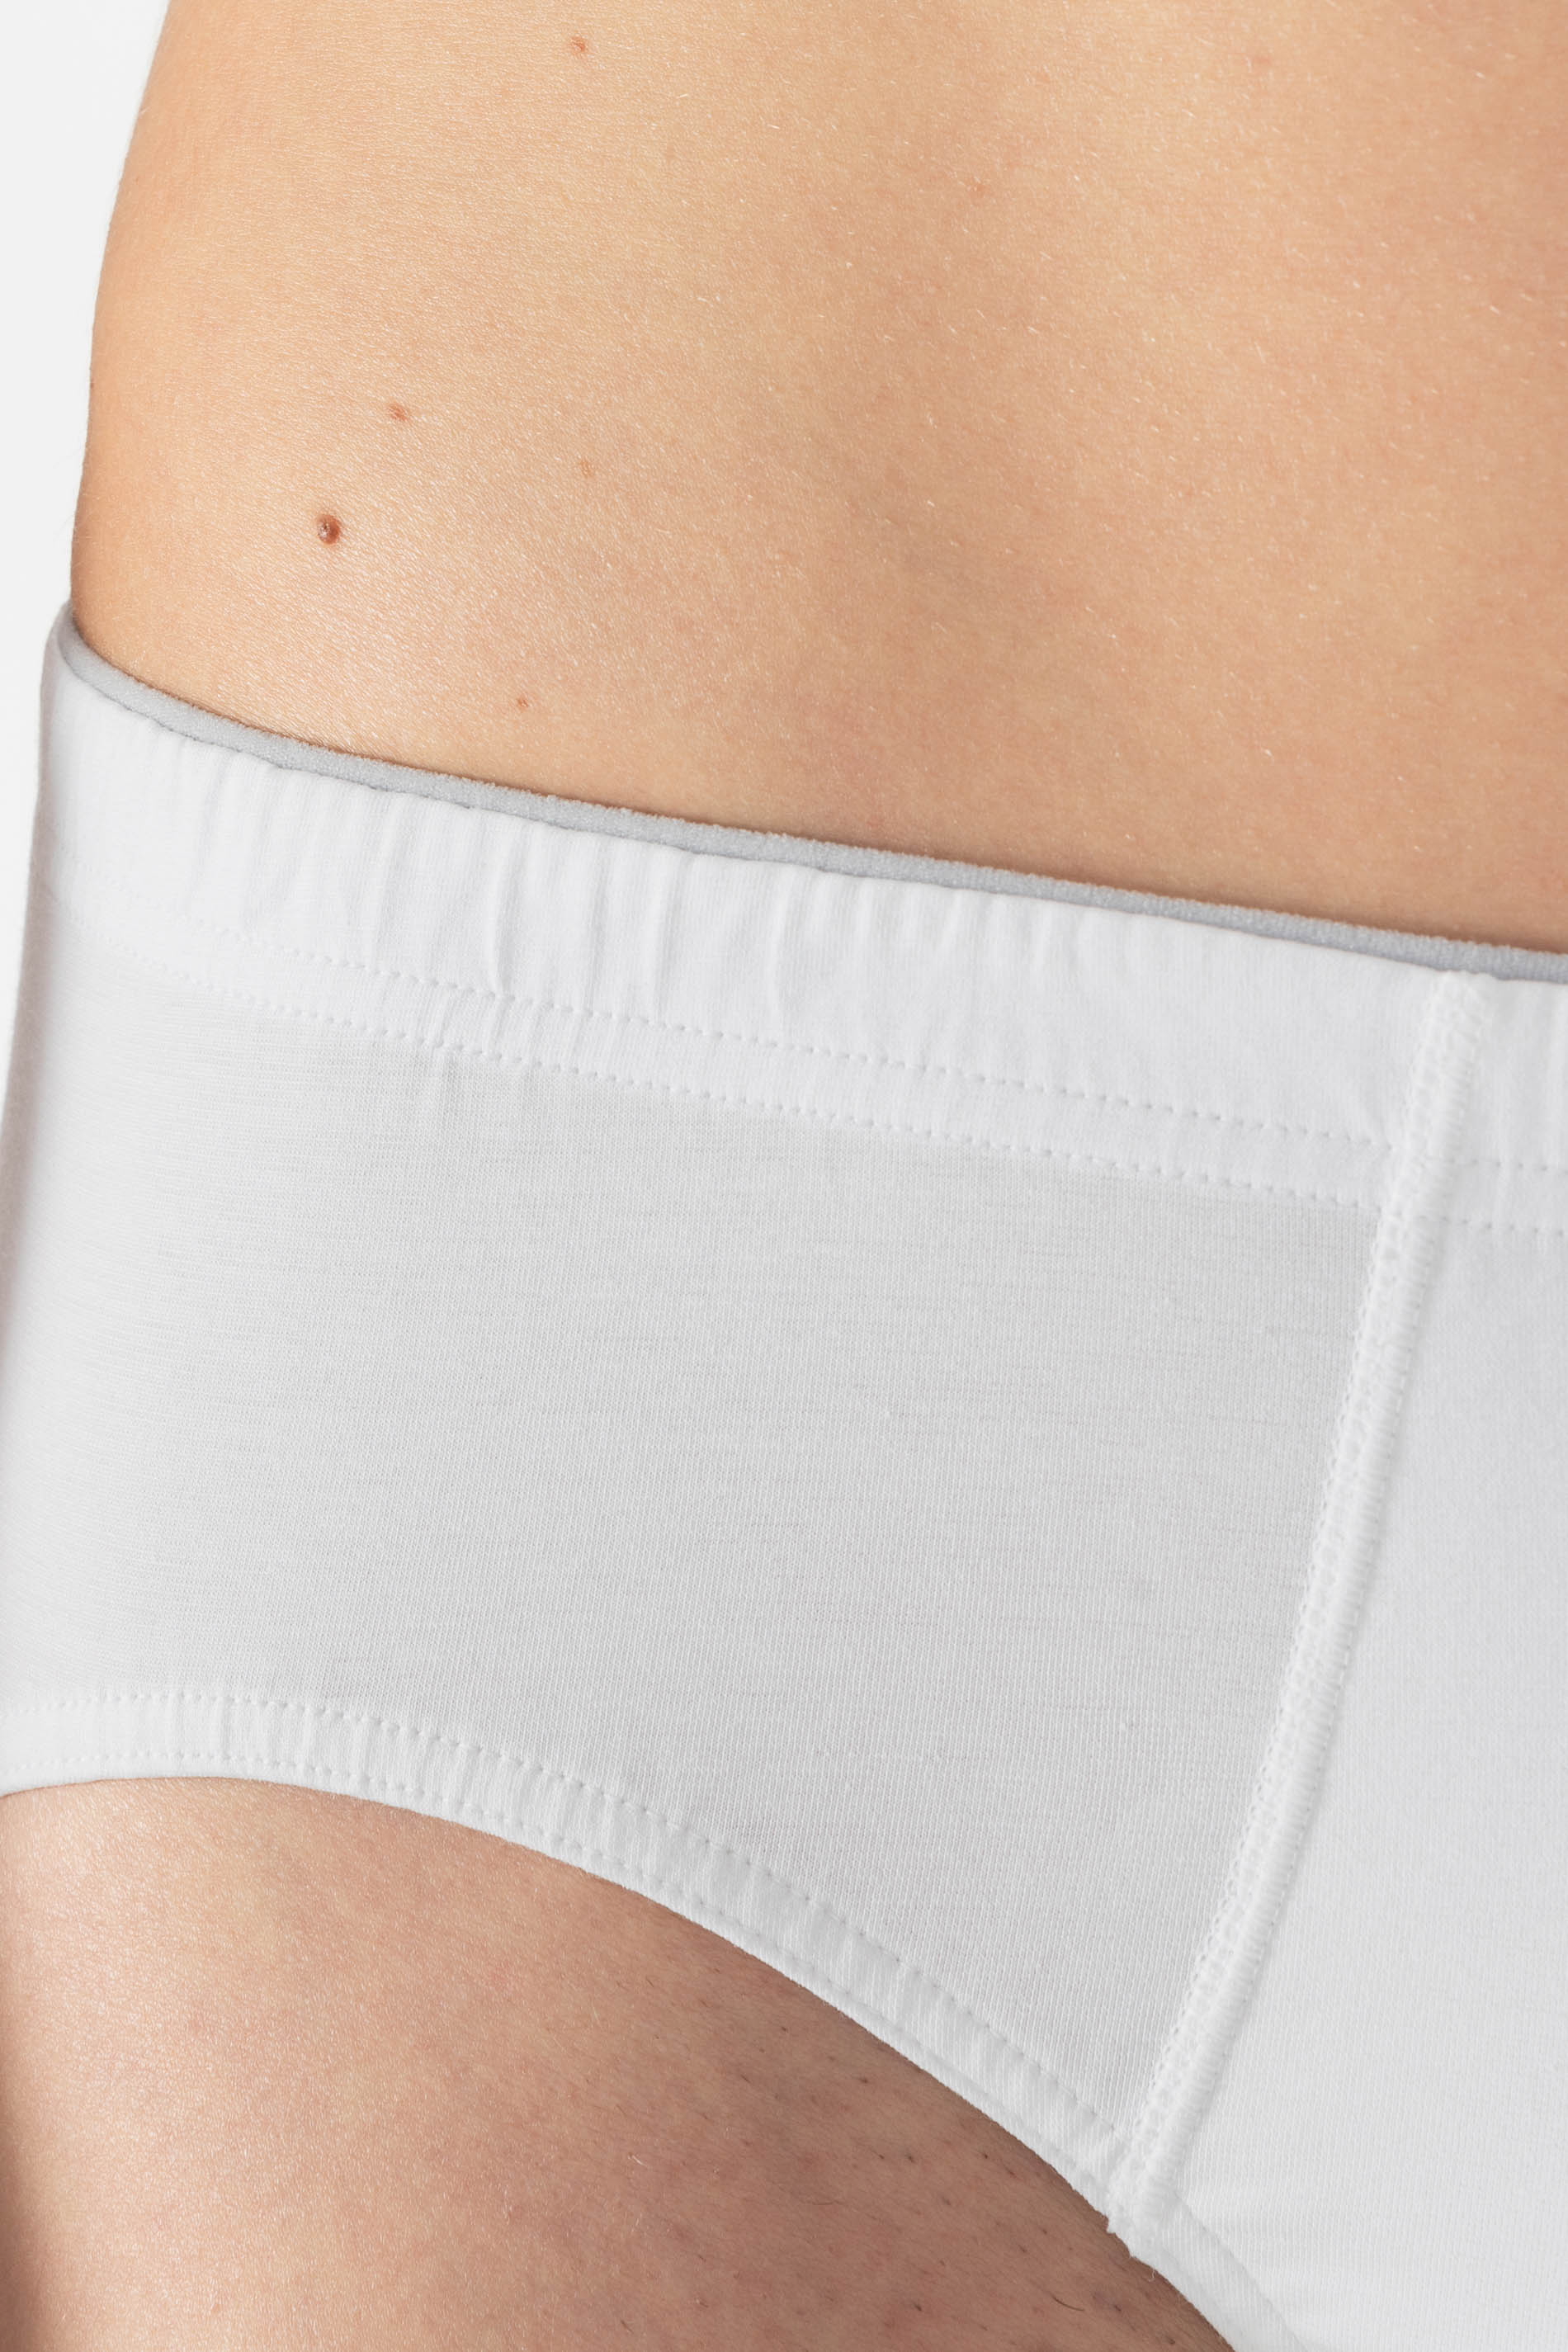 Jazz pants White Serie Dry Cotton Detail View 01 | mey®